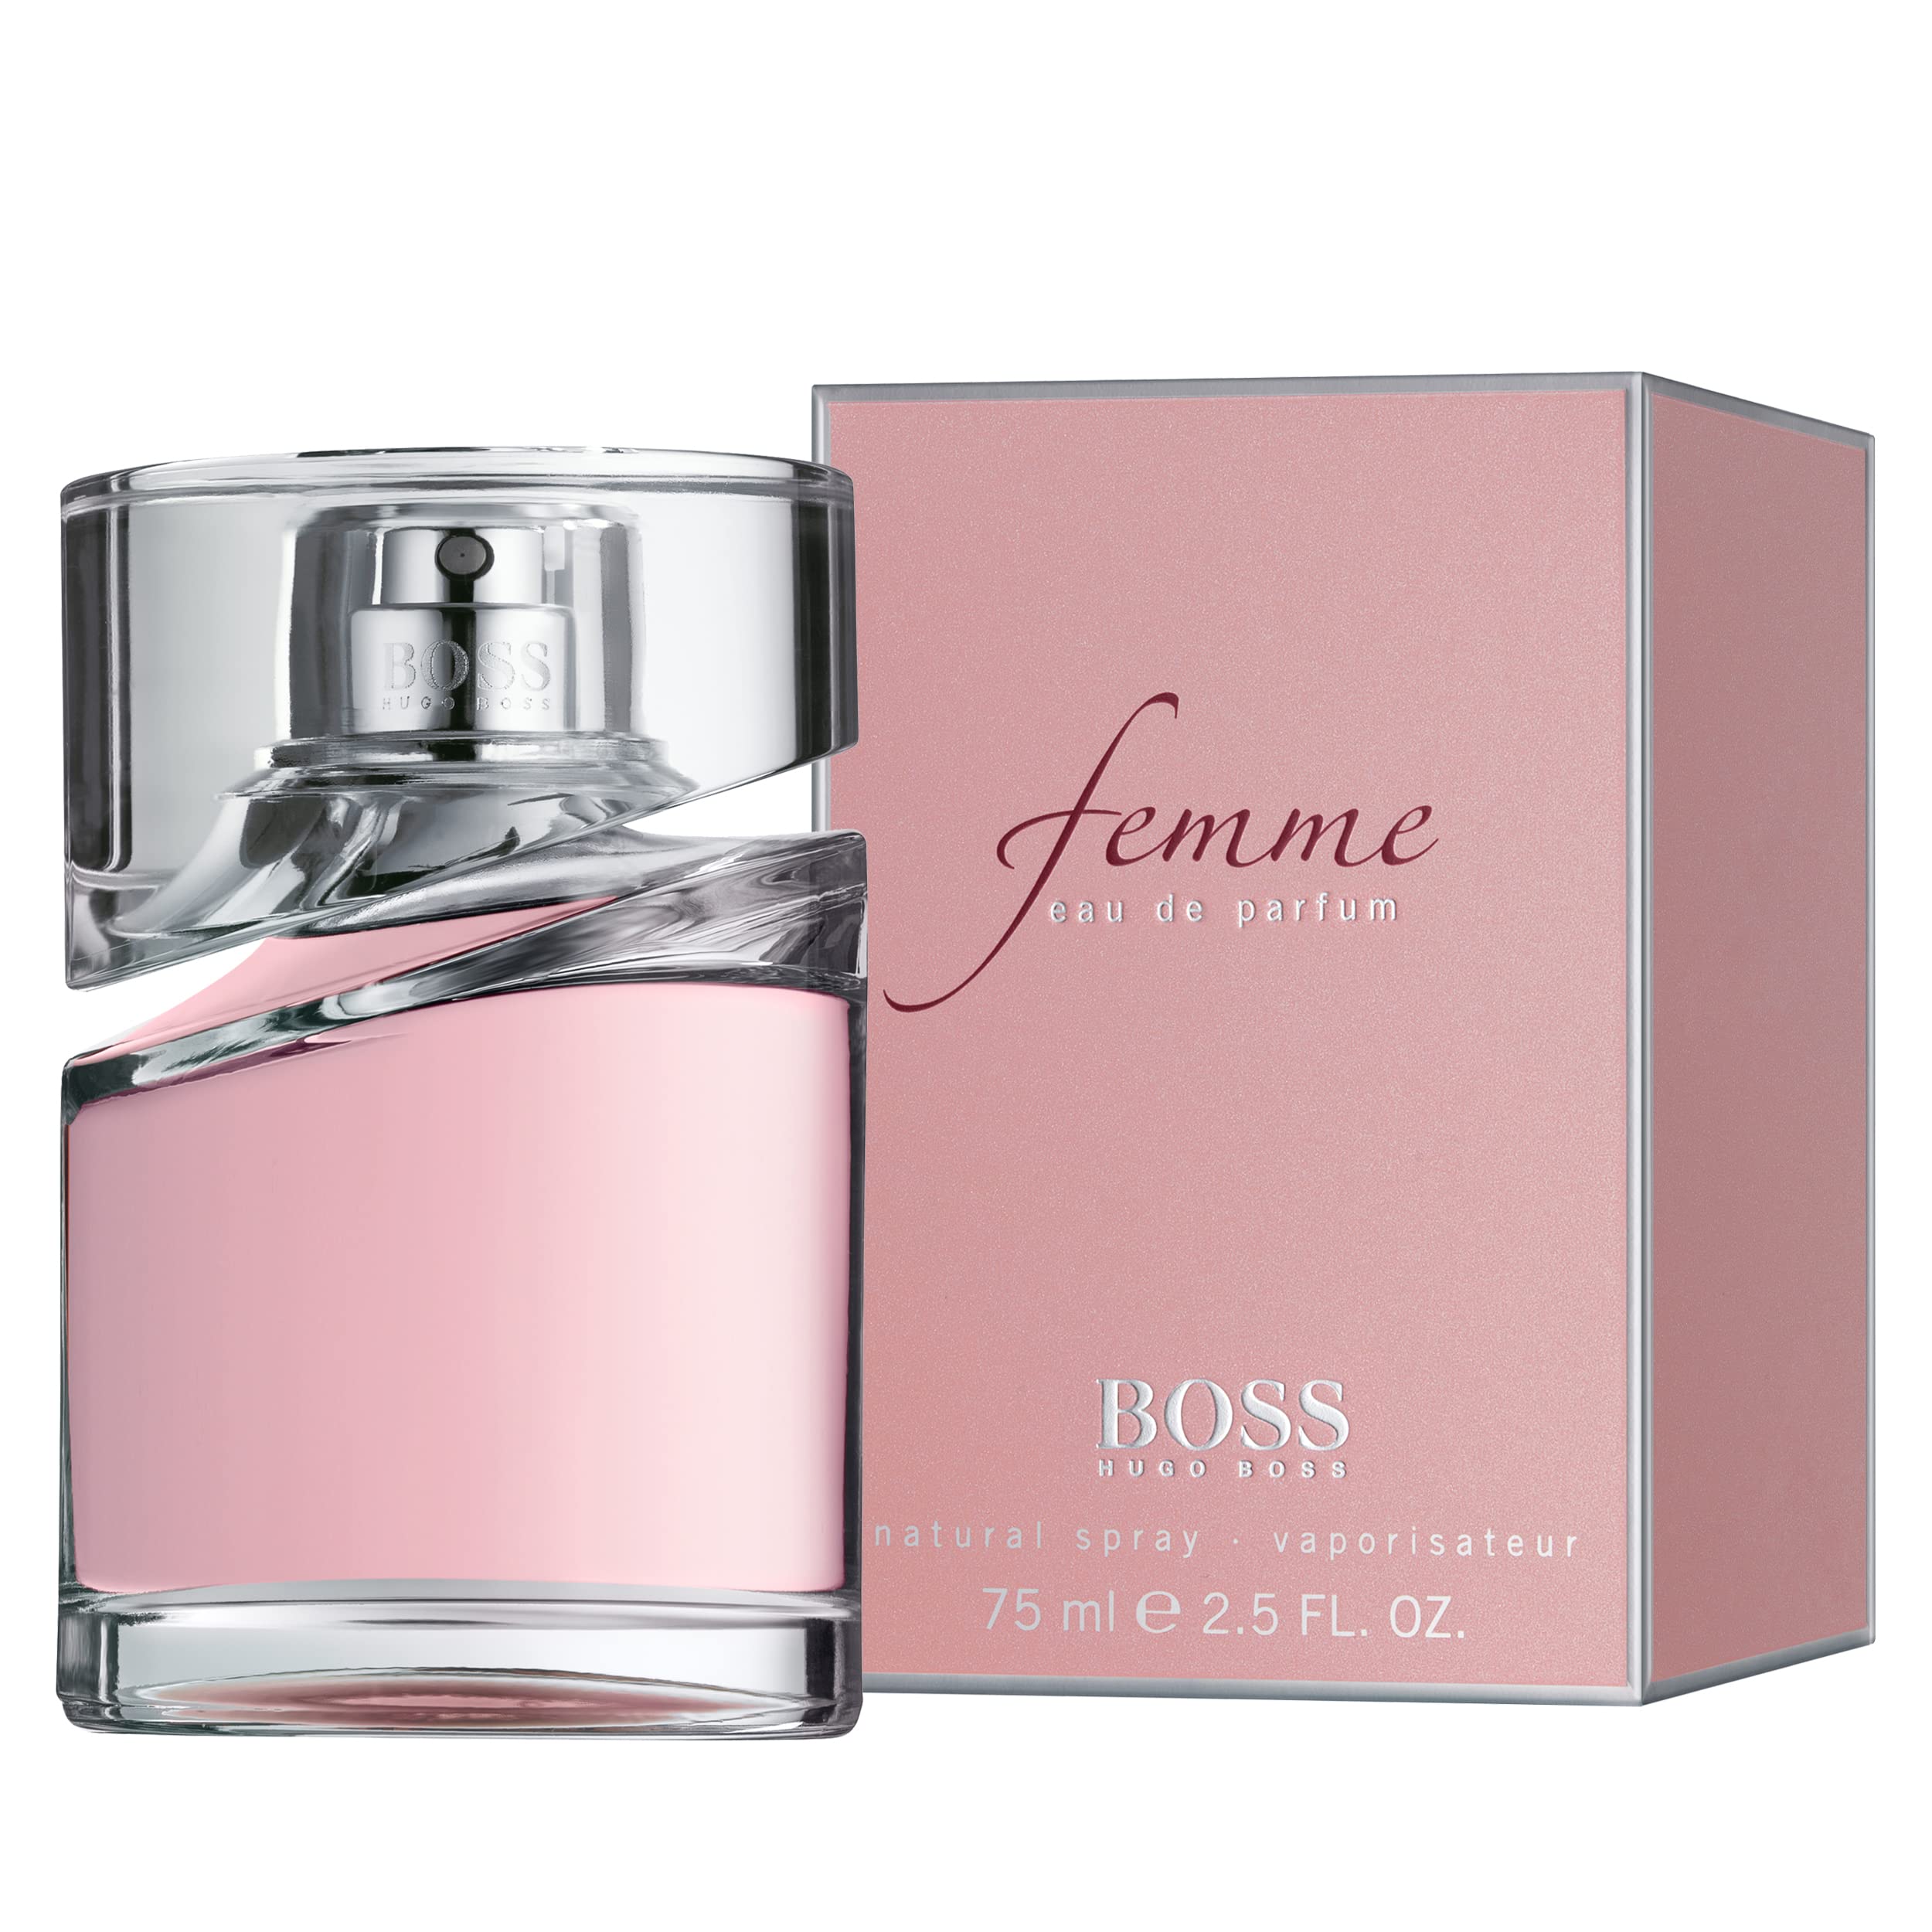 Hugo Boss Femme Eau de Parfum for Women - Notes of Tangerine and Blackcurrant